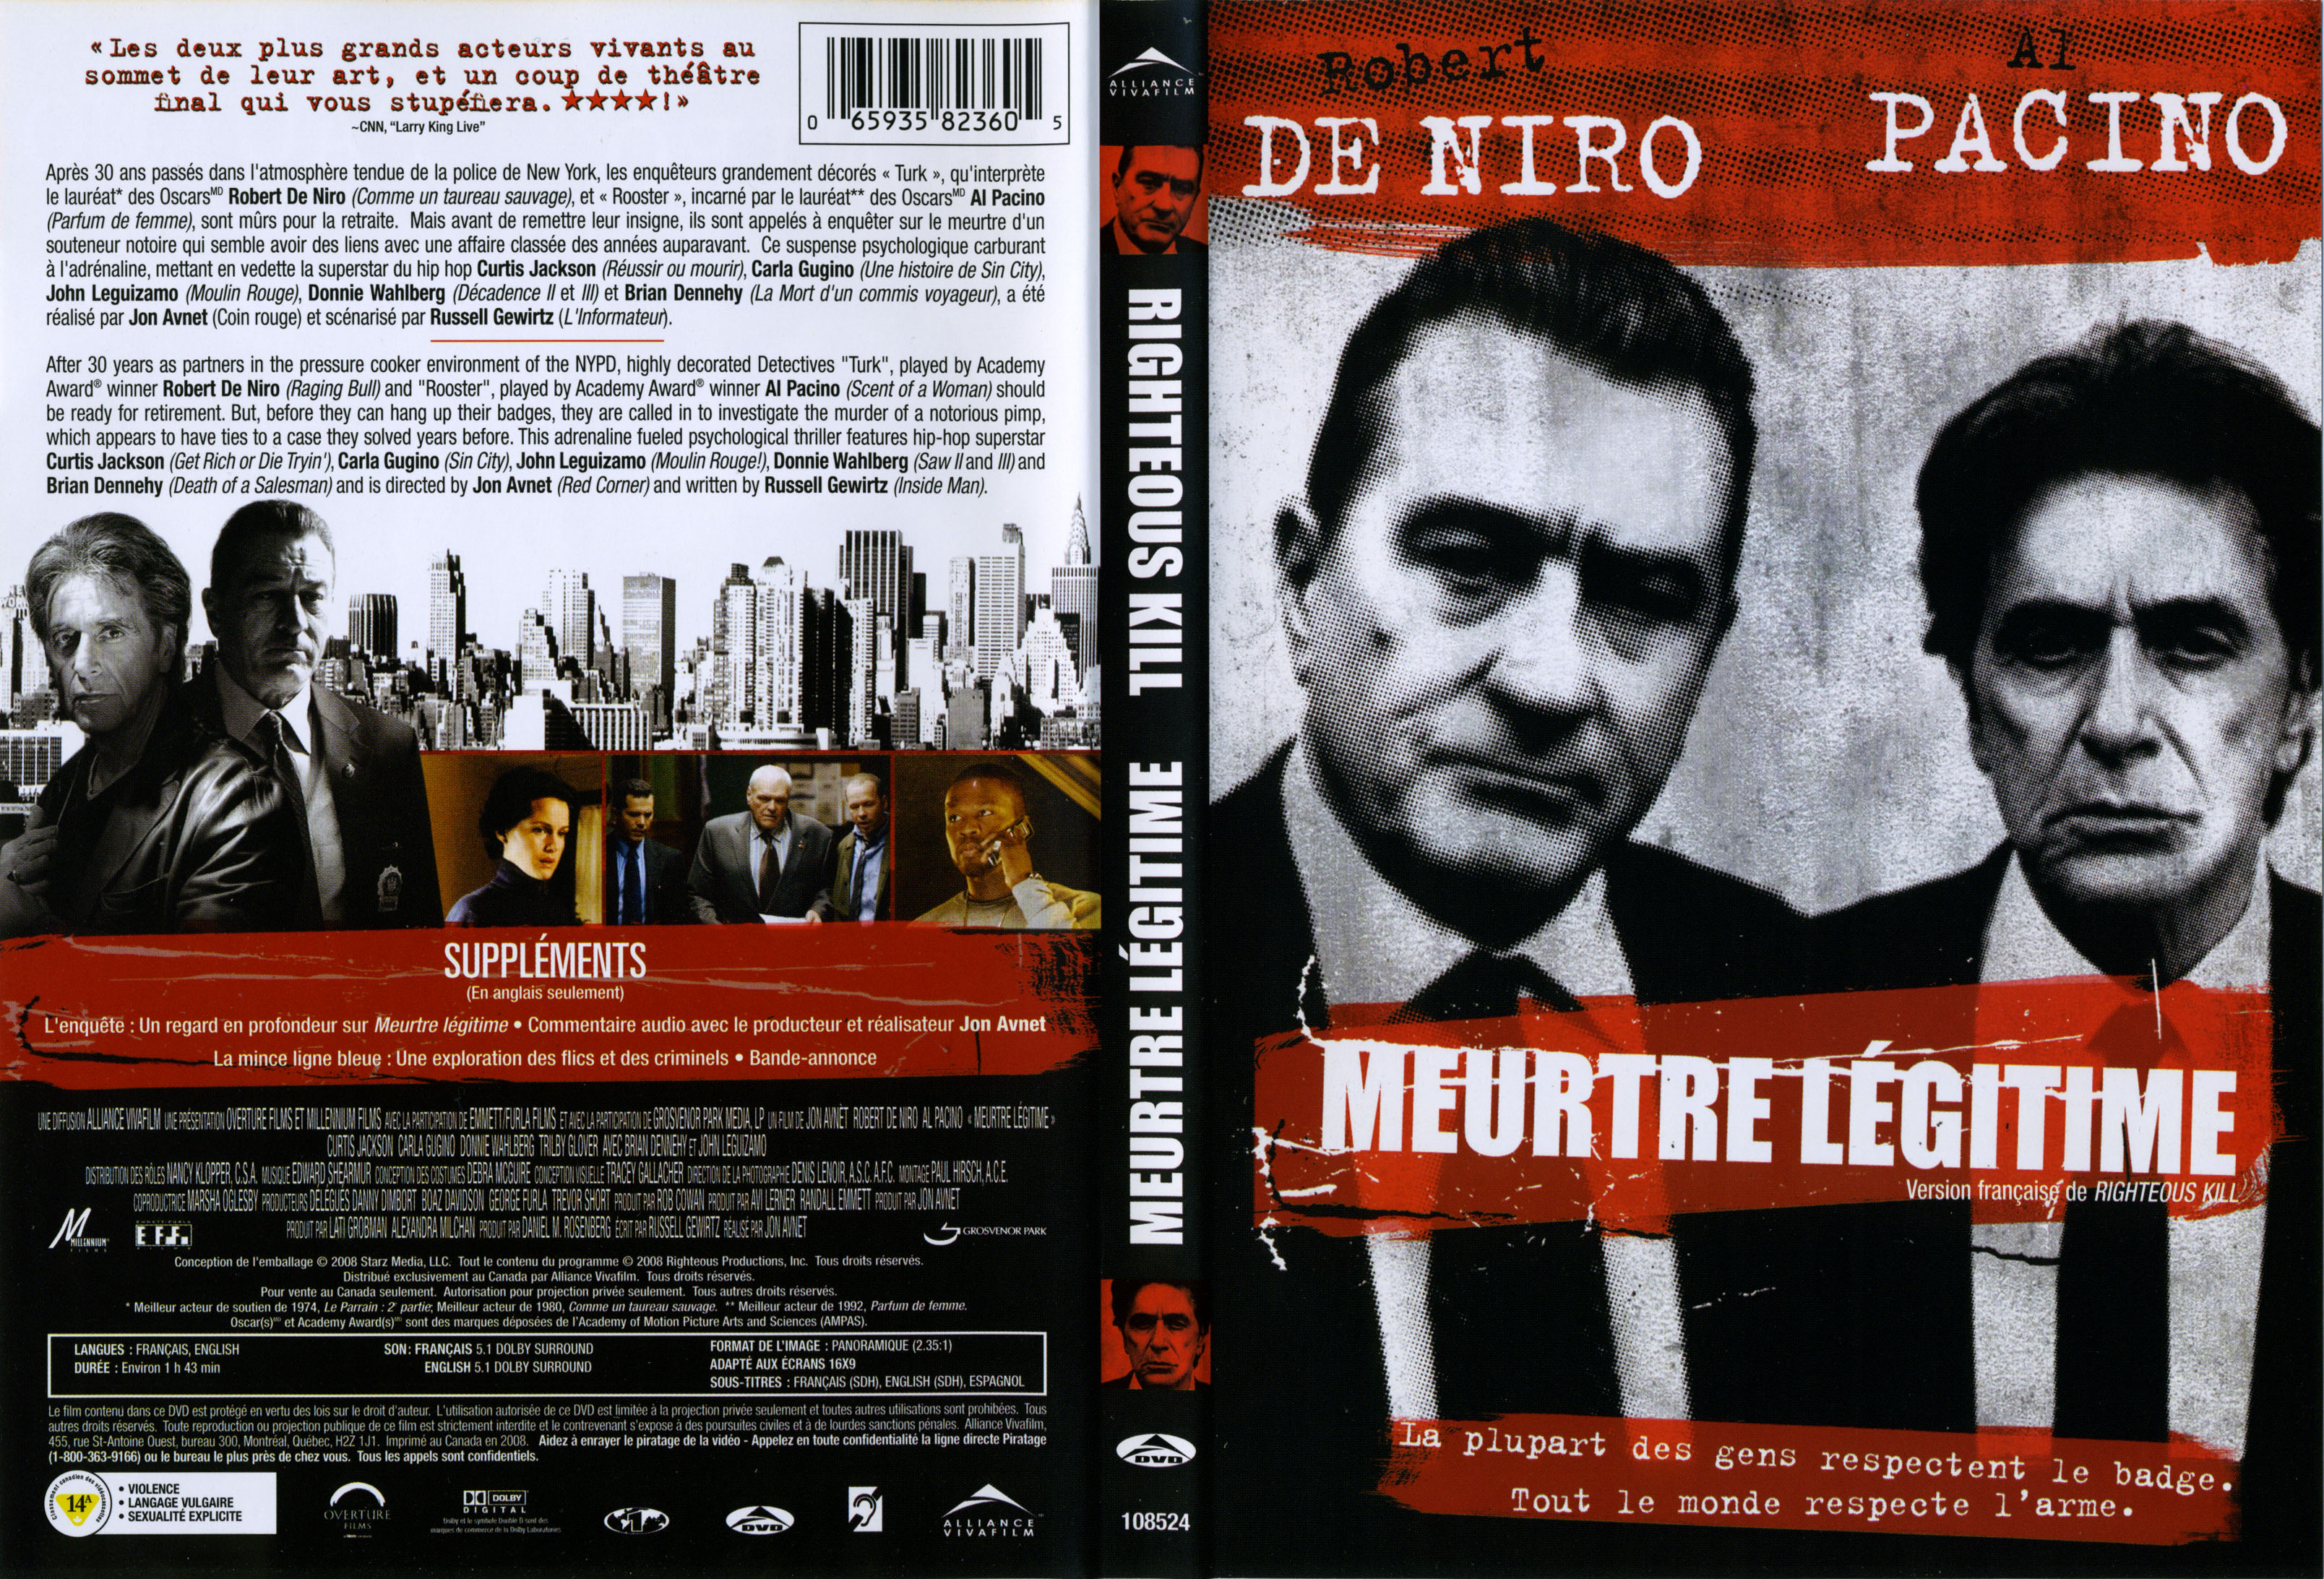 Jaquette DVD Meurtre lgitime - Righteous kill